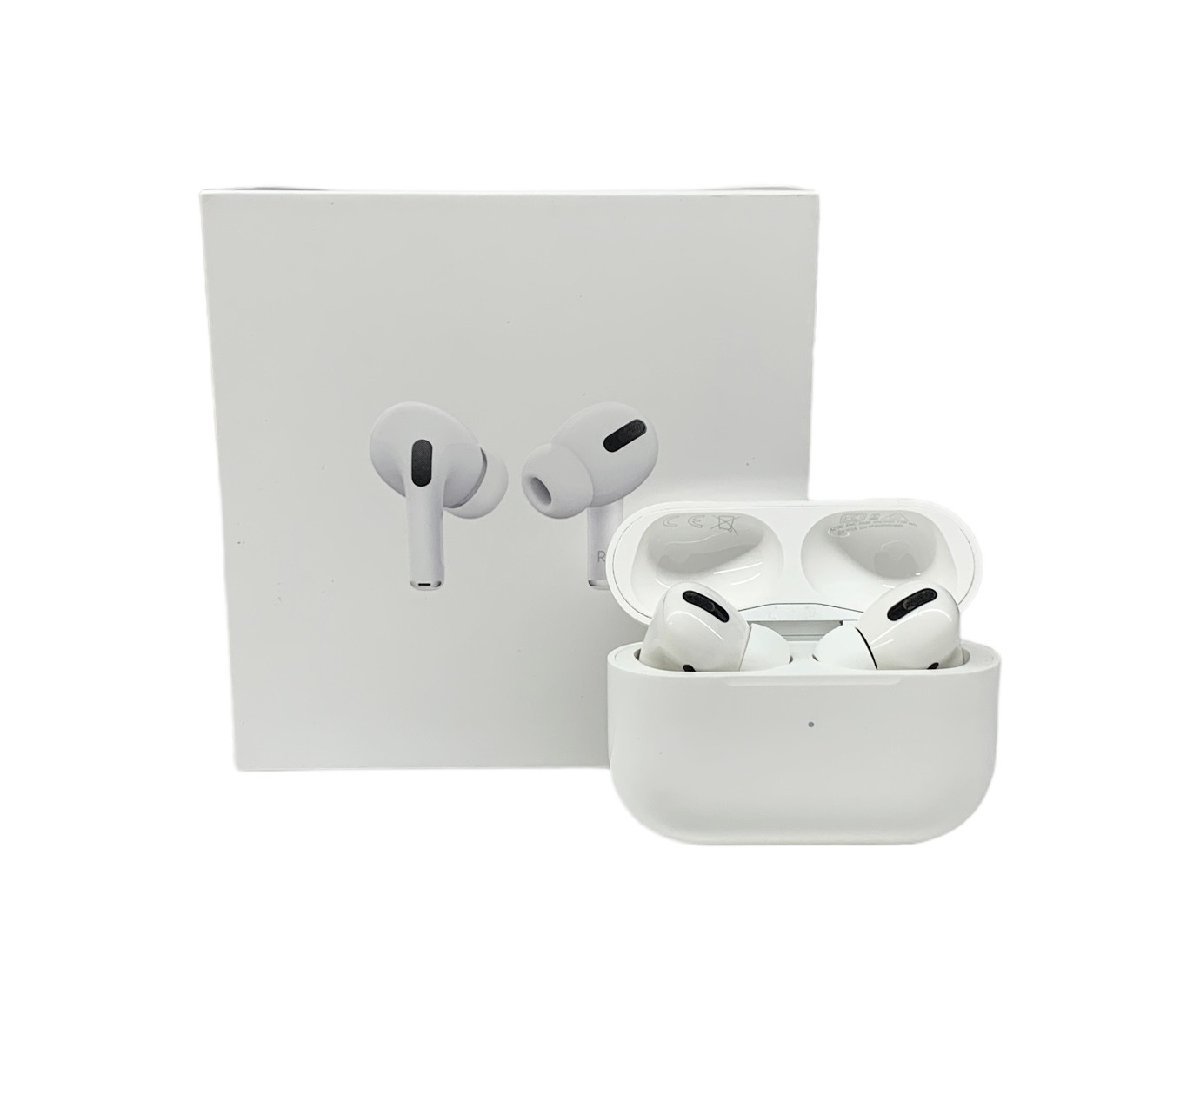 Apple (アップル) AirPods Pro with Wireless Charging Case ワイヤレスイヤホン MWP22J/A ホワイト 家電/025